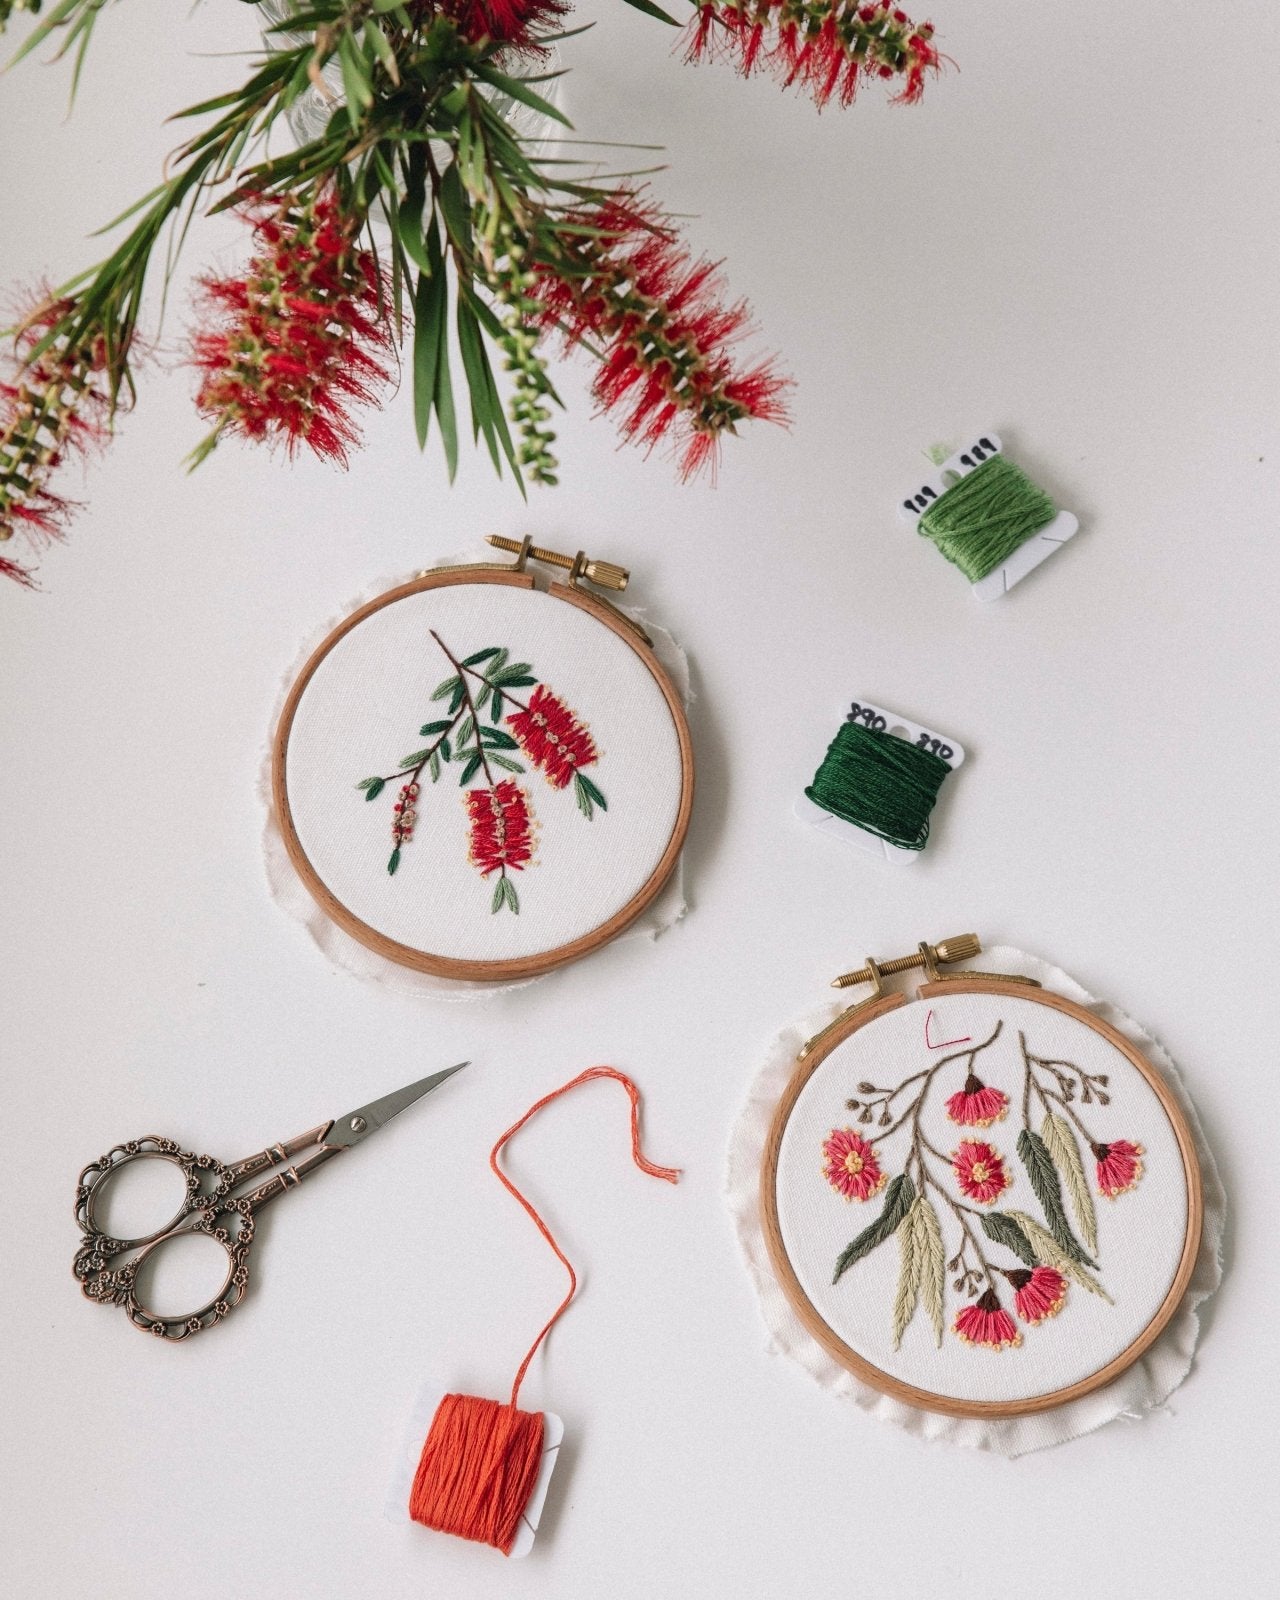 All 5 Mini Embroidery Kits - Stitched Up Kits